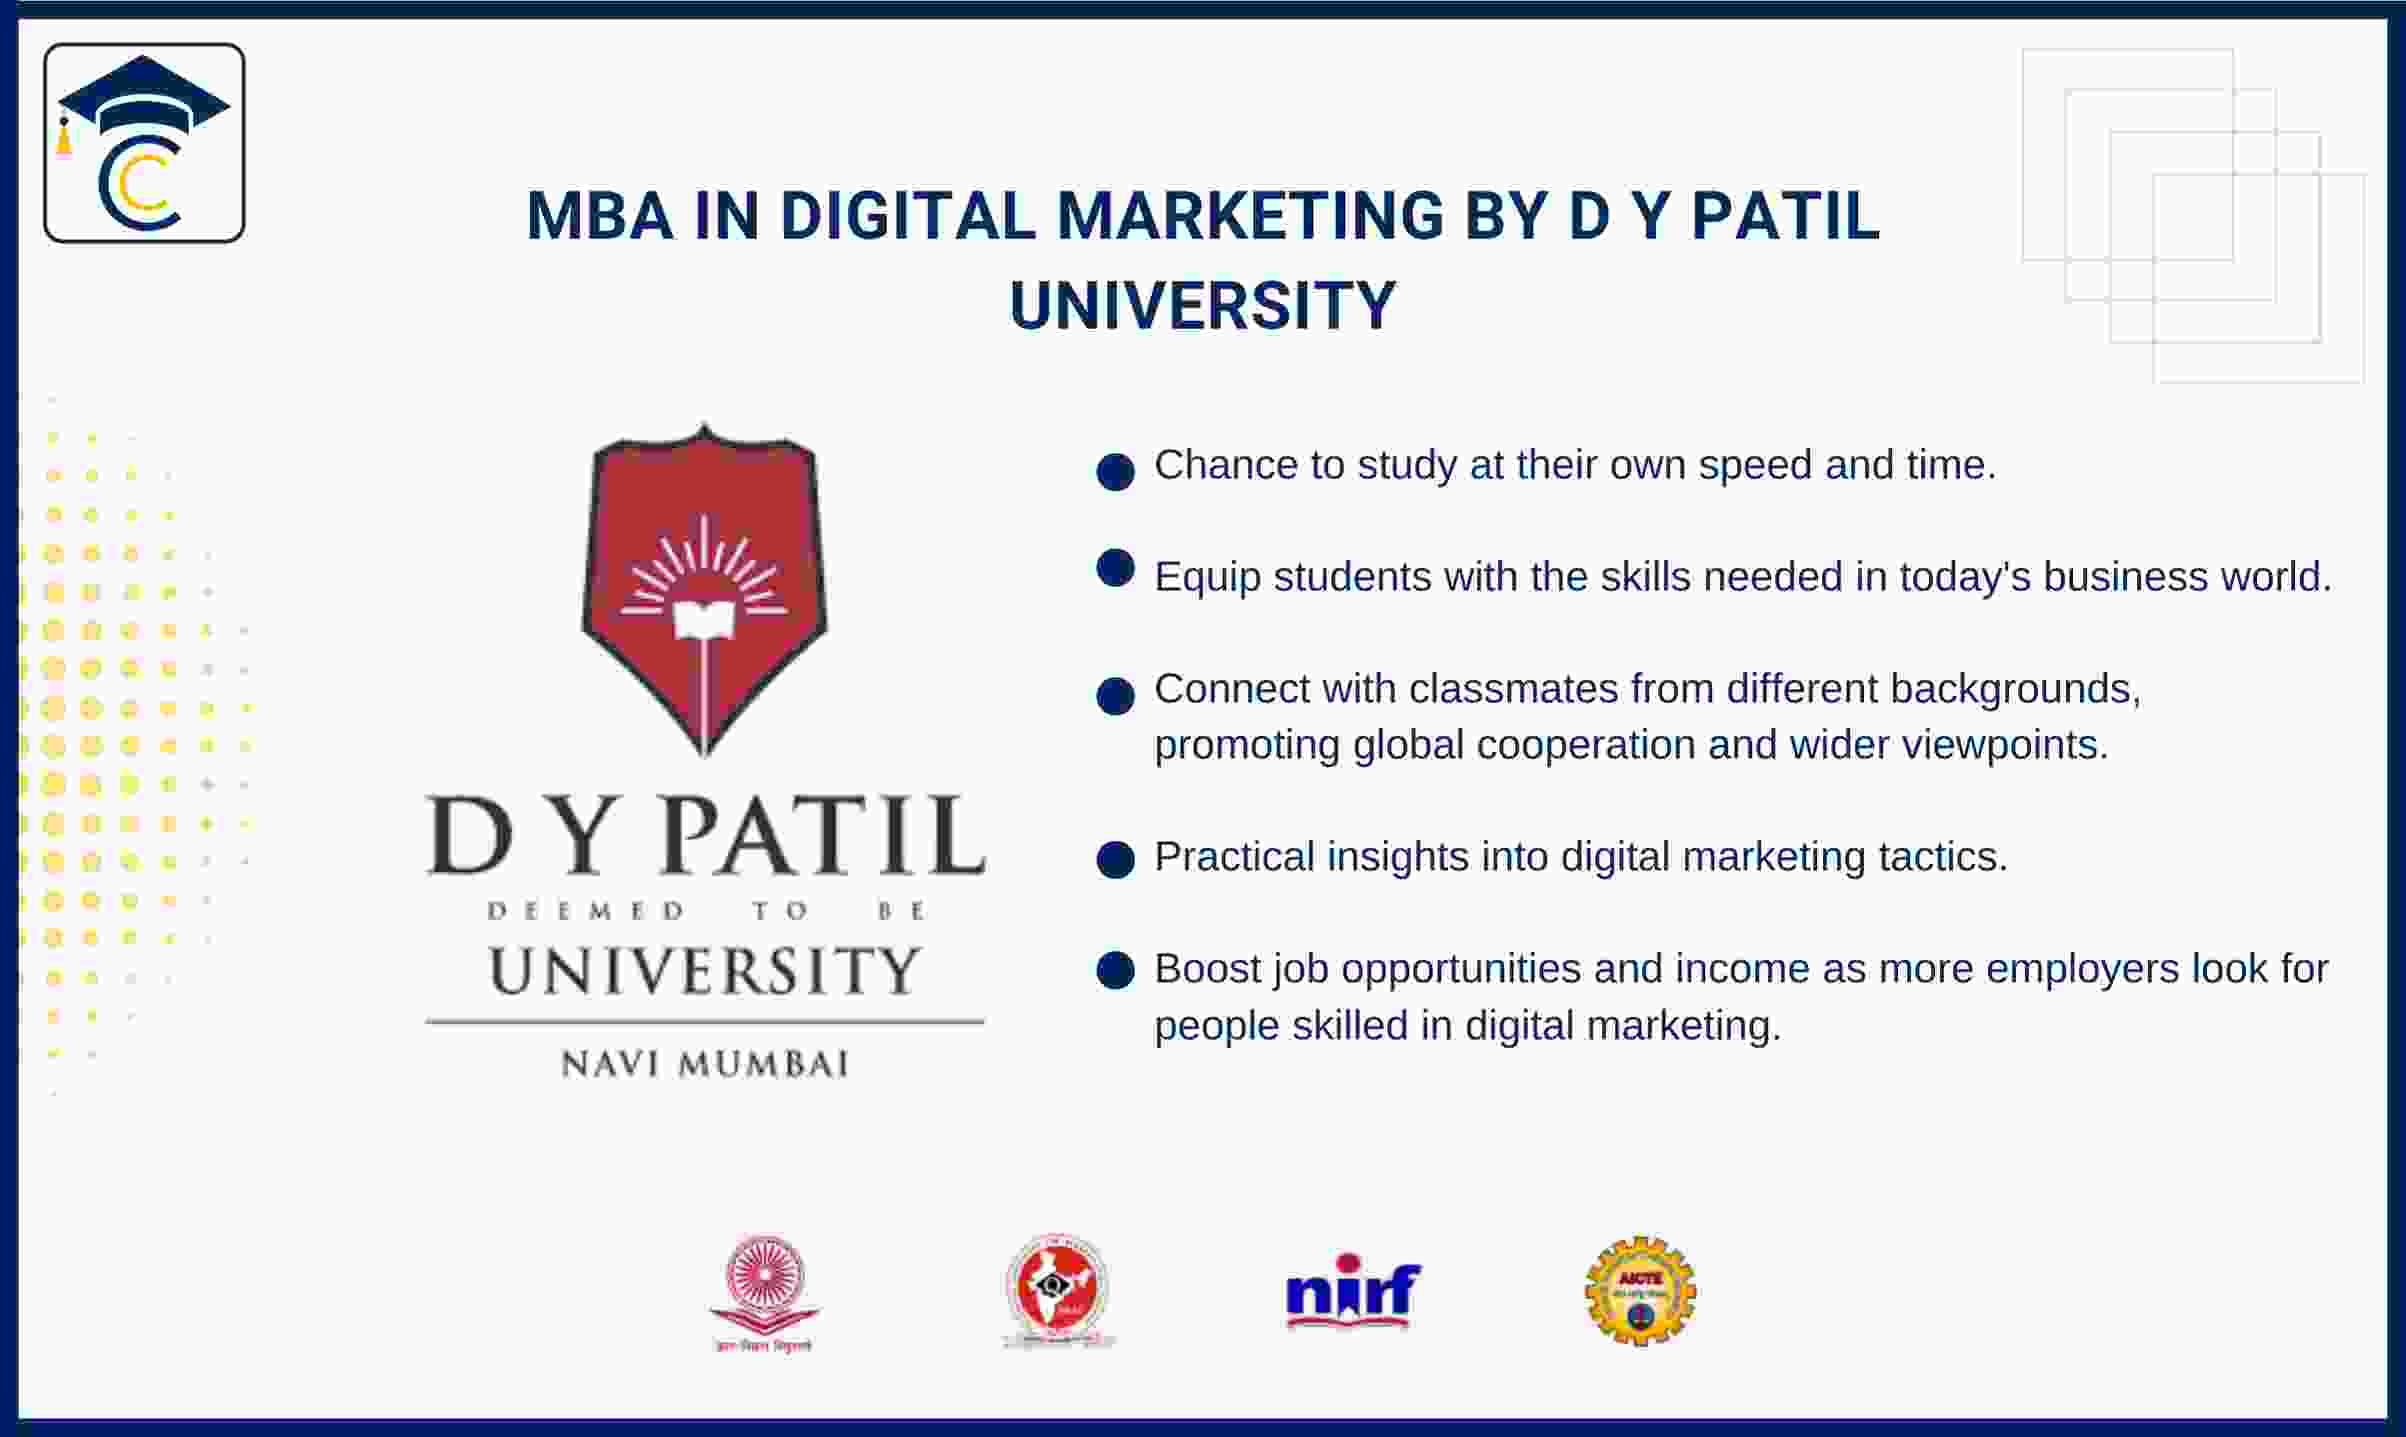 mba-in-digital-marketing-dy-patil